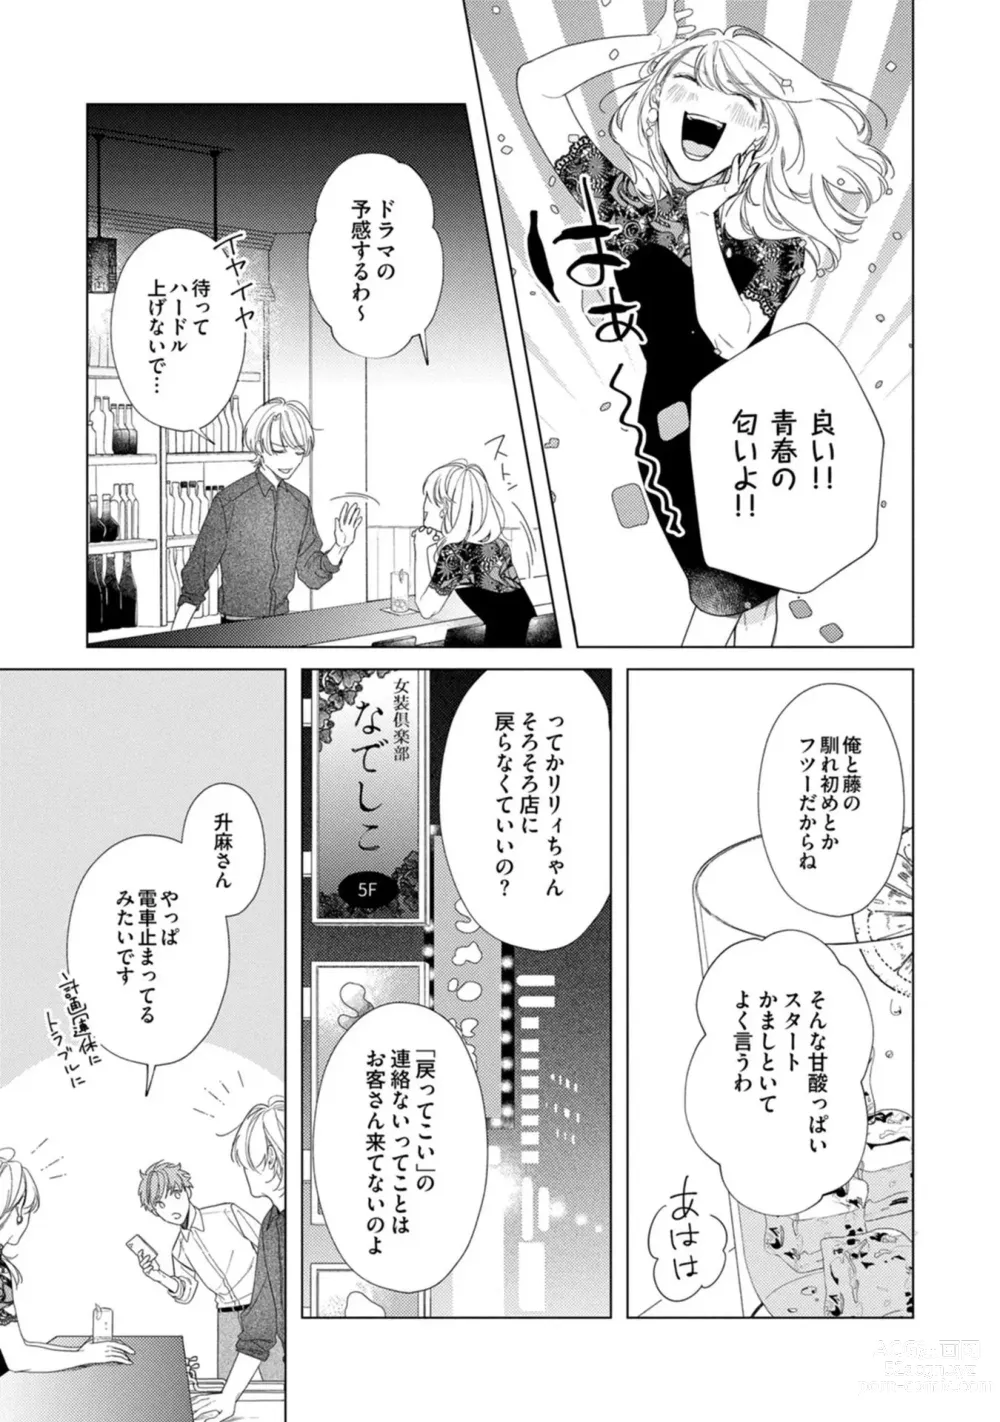 Page 39 of manga Yoru mo, Asa mo